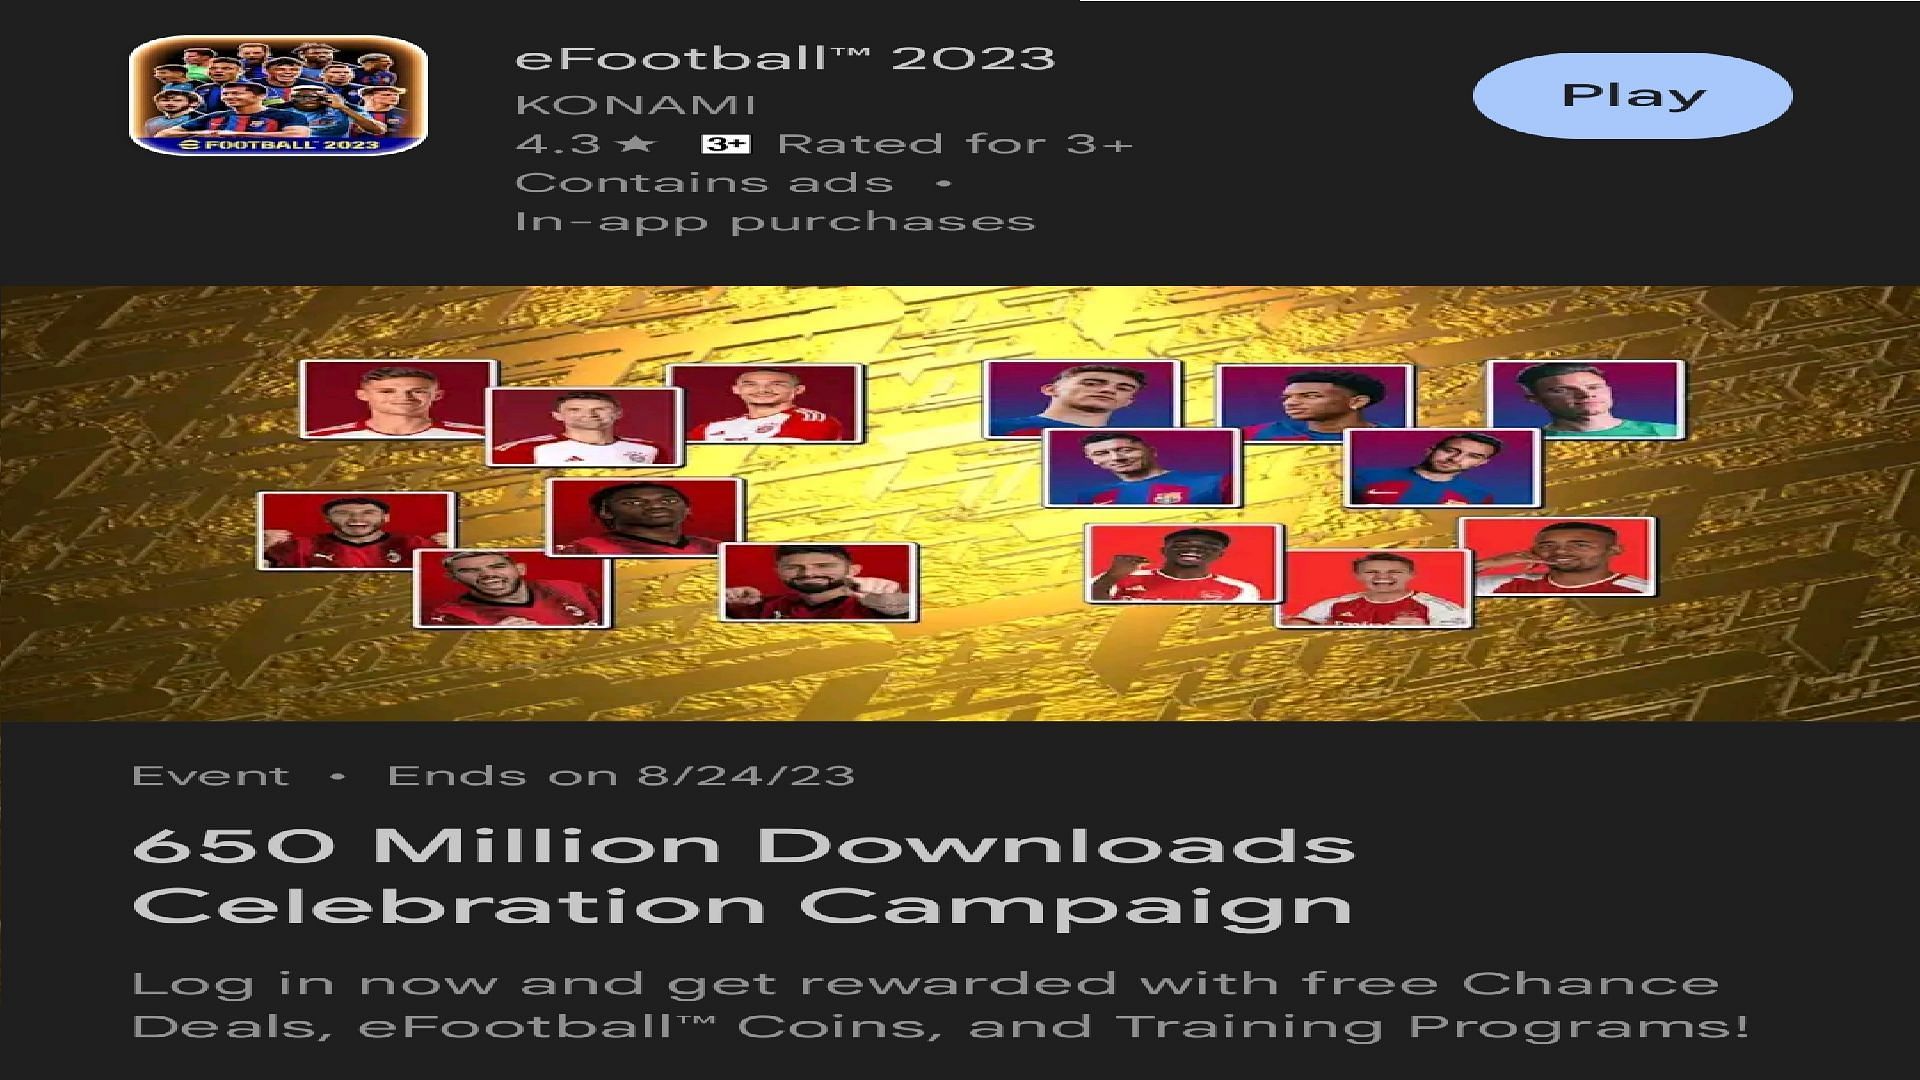 eFootball Season 0 Content Revealed; Mobile Downloads Hit 650 Million